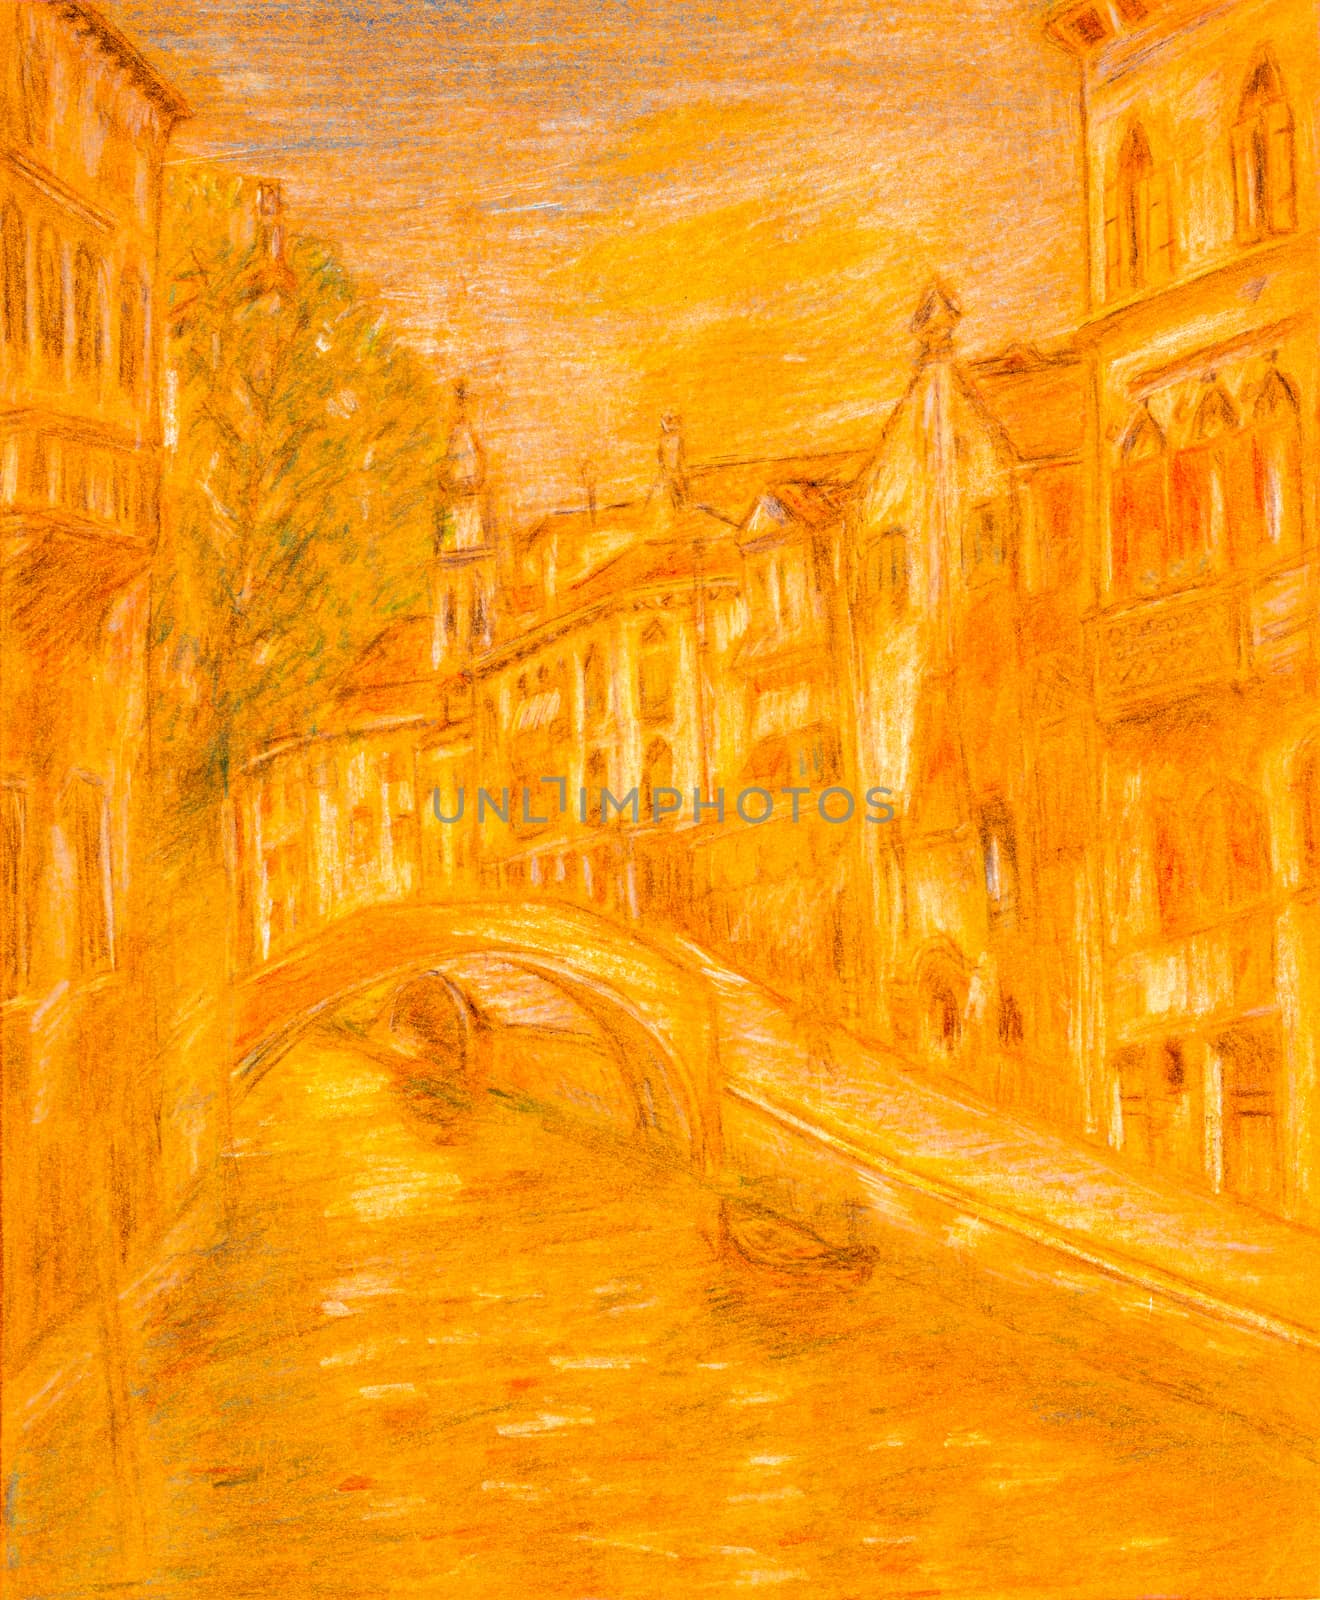 Pencil sketch of Venice city scene on orange colored paper.